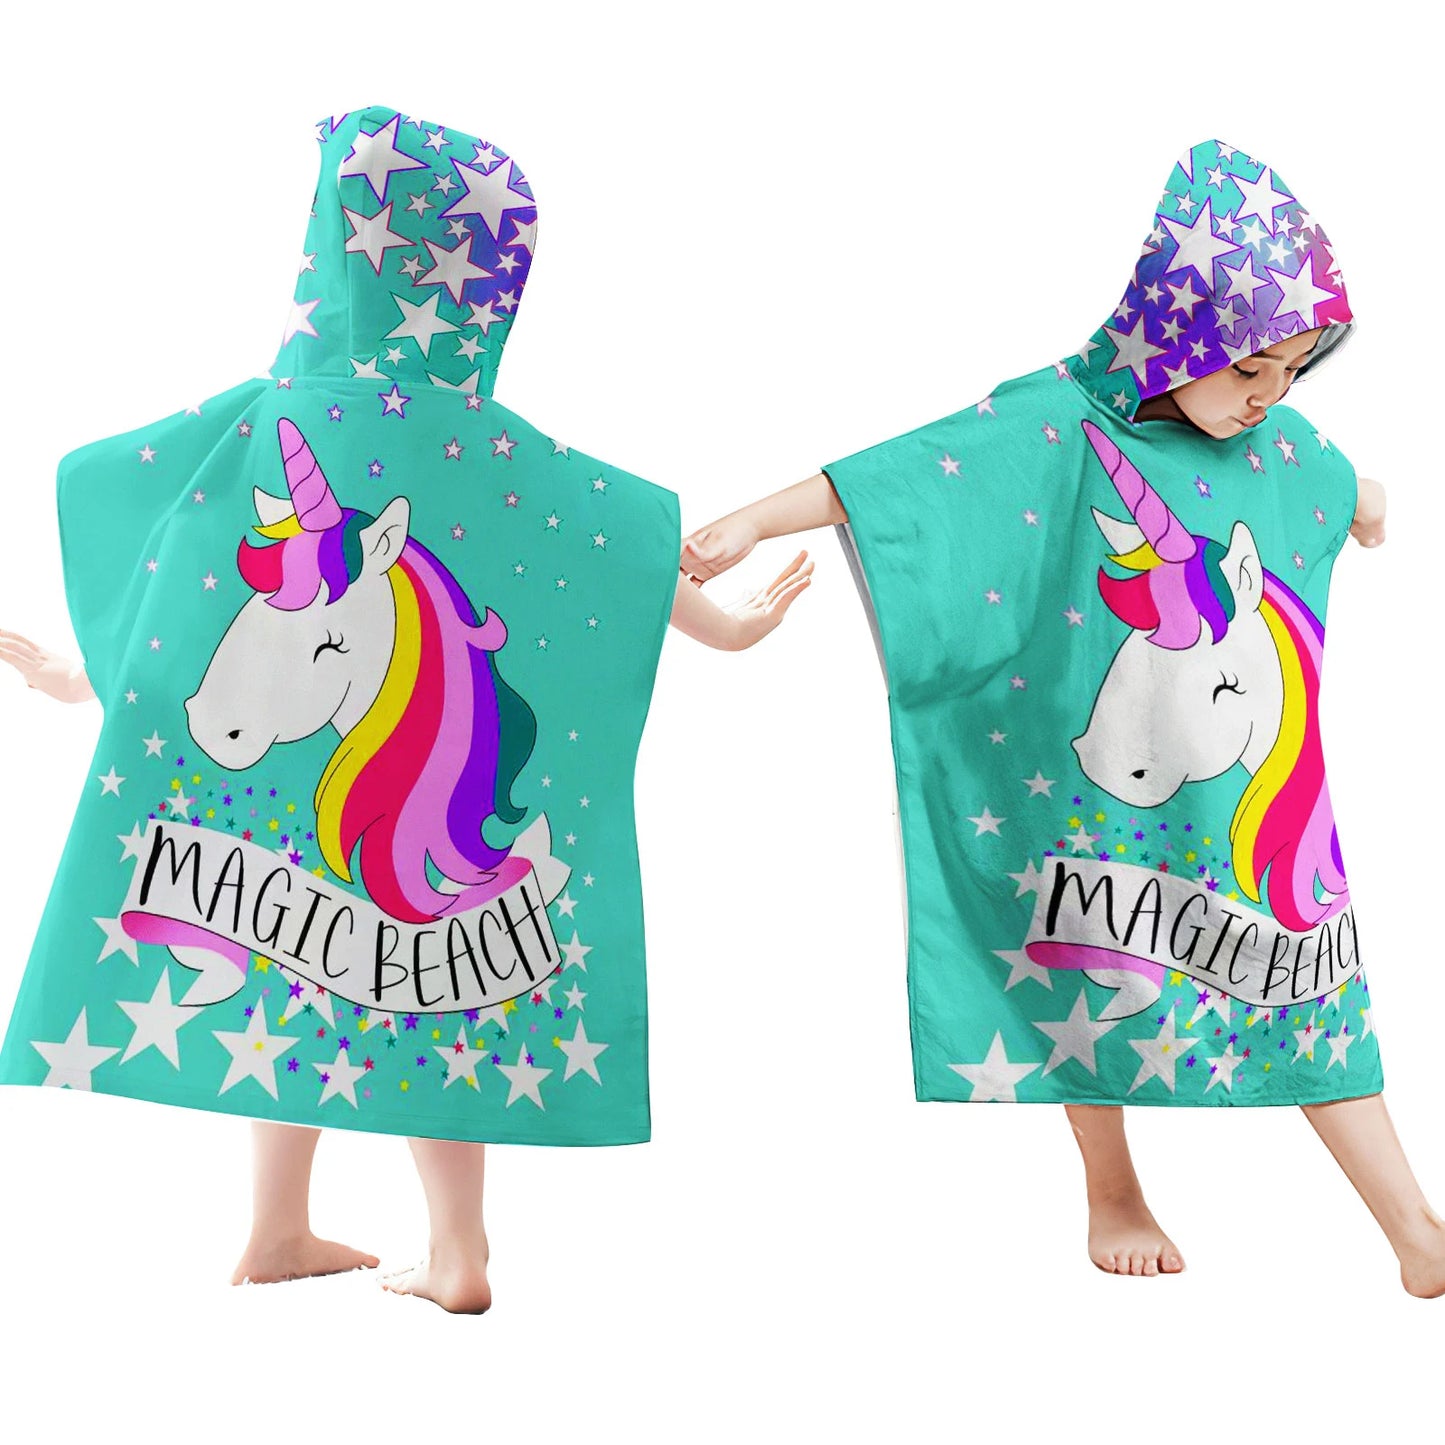 "Magic Beach" Unicorn Towel Poncho